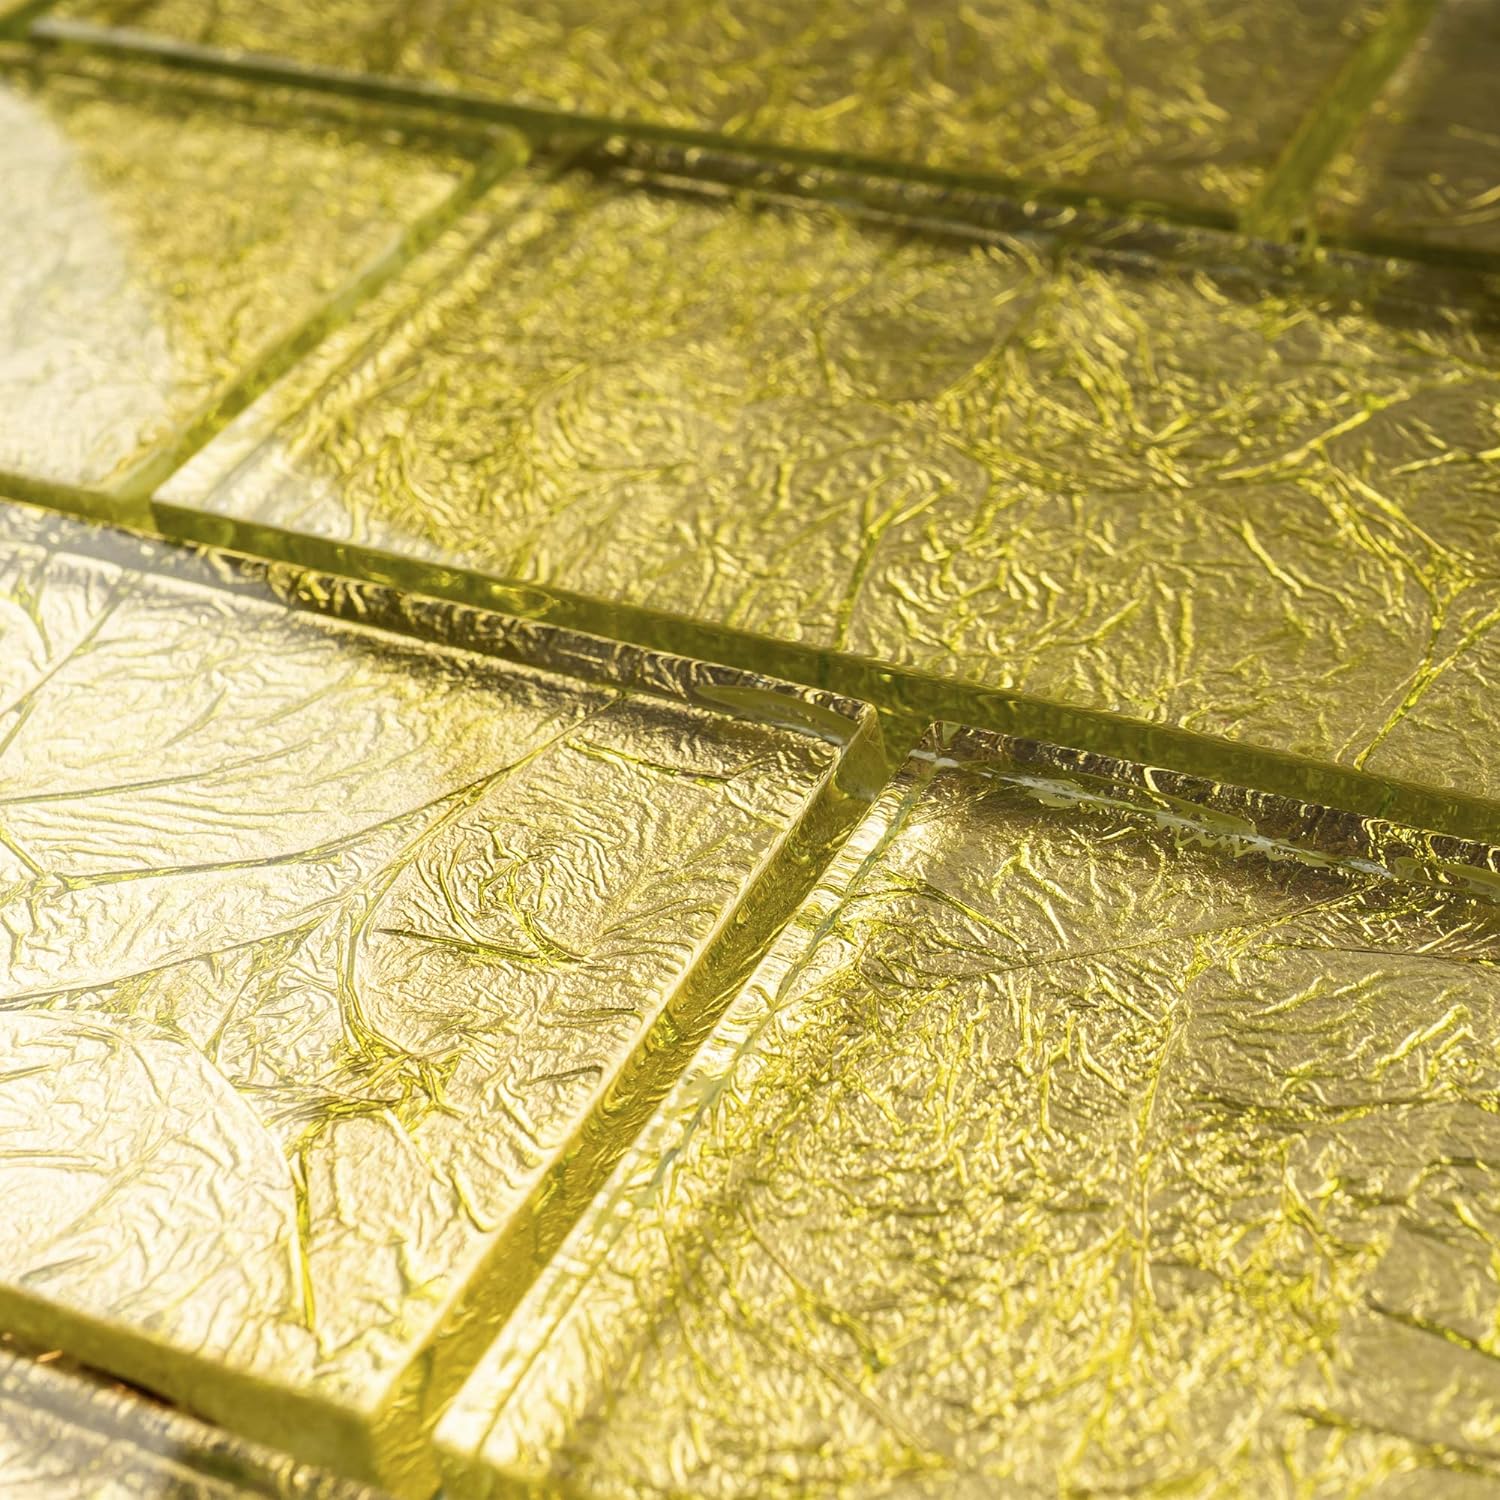 TGKG-01 Gold 2x4 Glass Mosaic Tile Sheet Subway Tile -Kitchen and Bath backsplash Wall Tile